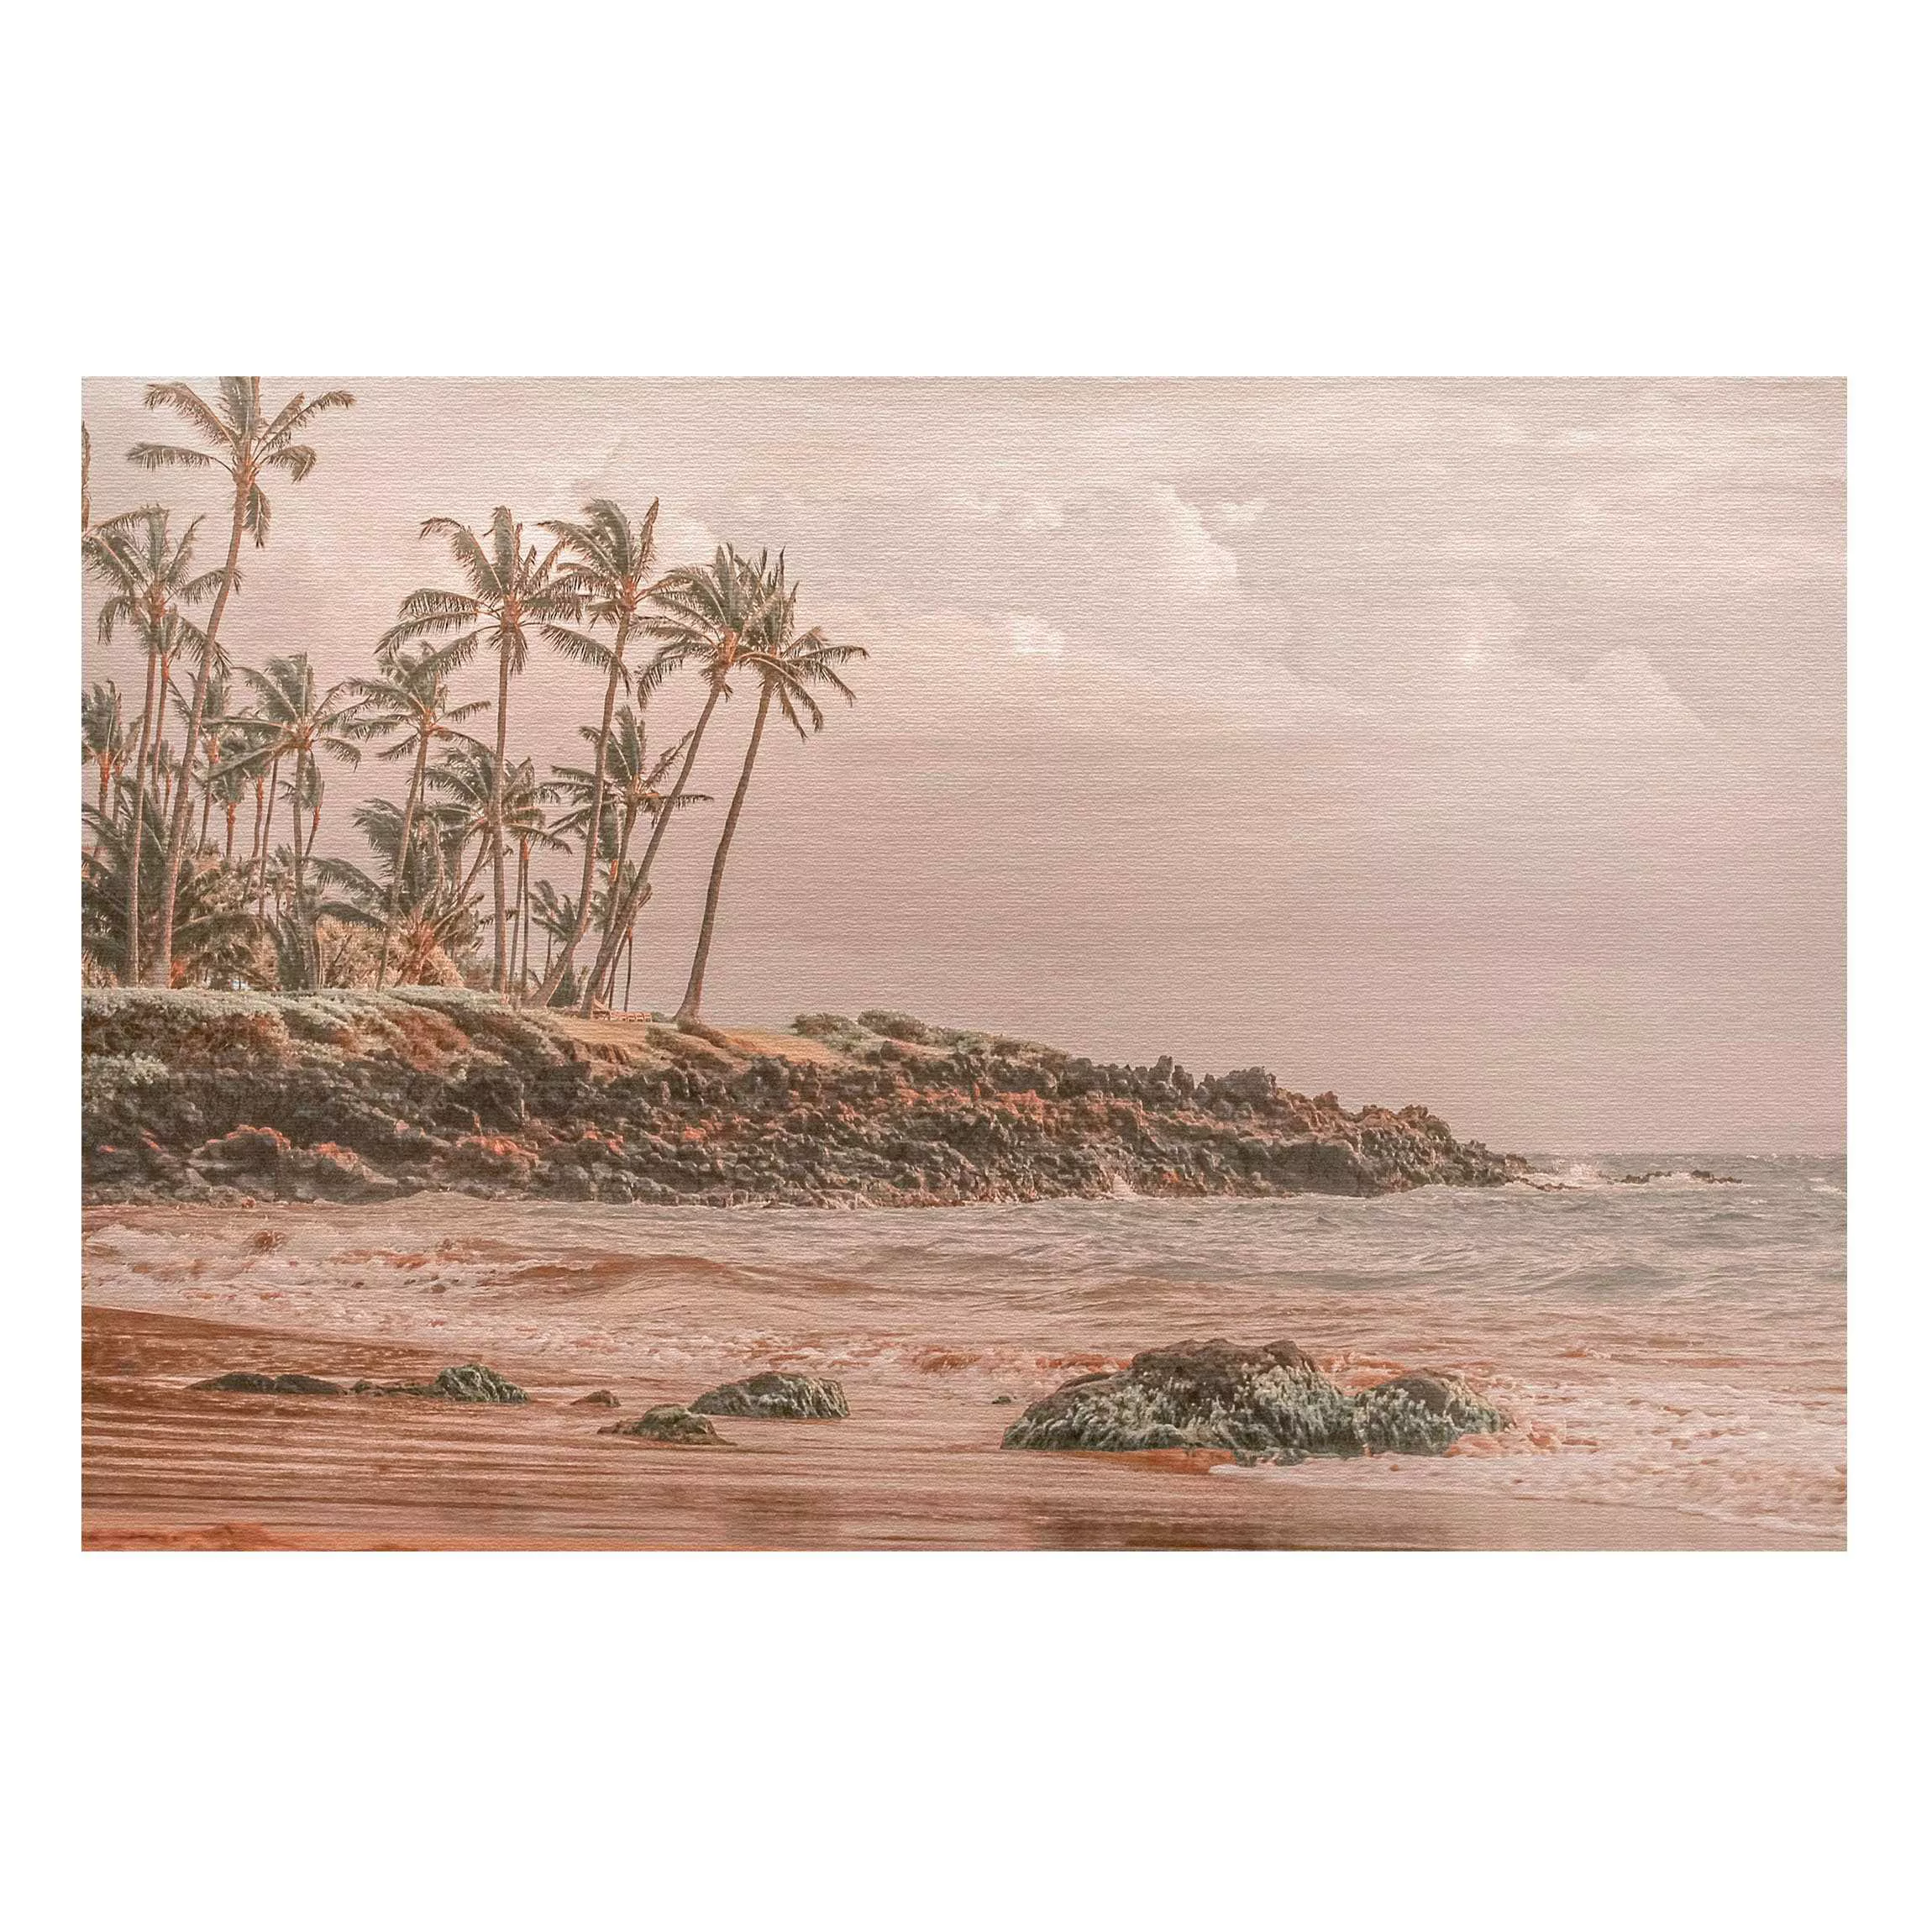 Magnettafel Aloha Hawaii Strand günstig online kaufen